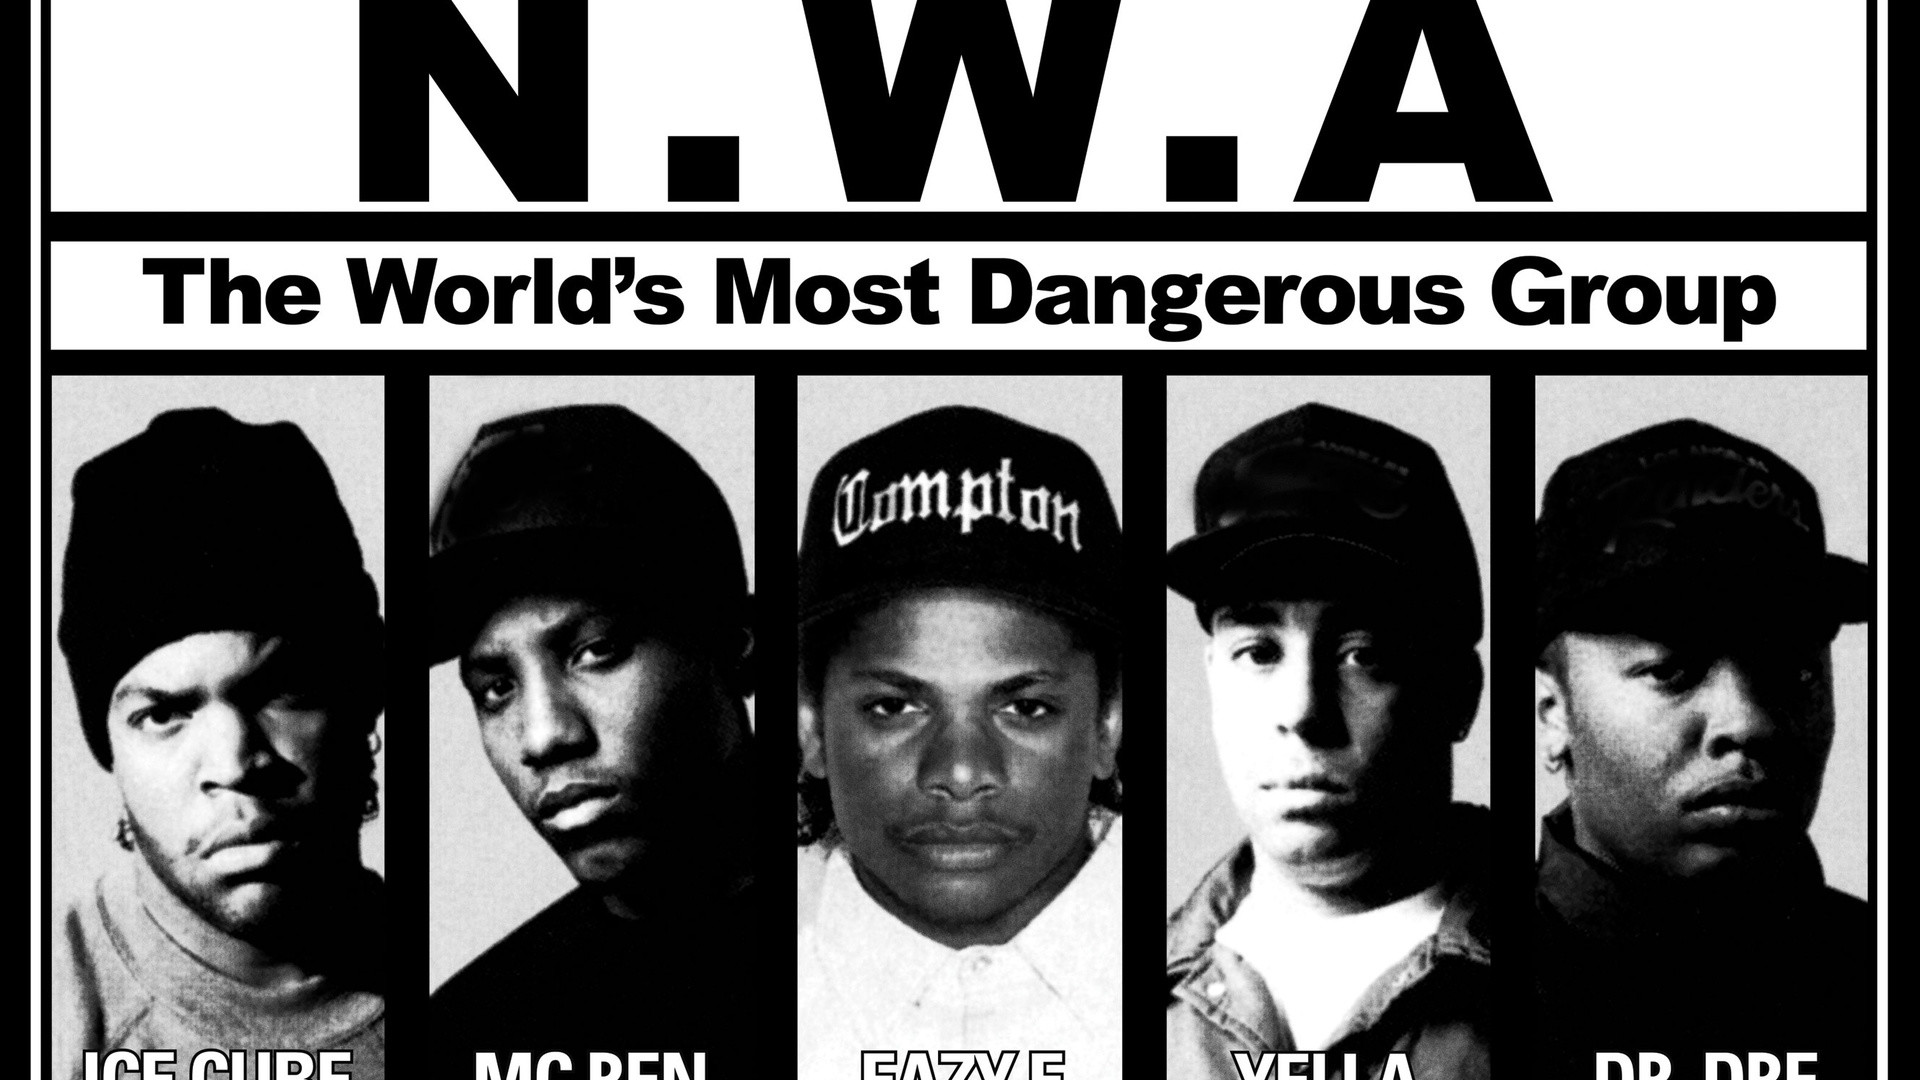 Eazy E nwa gangsta rapper rap hip hop eazy e sa wallpaper